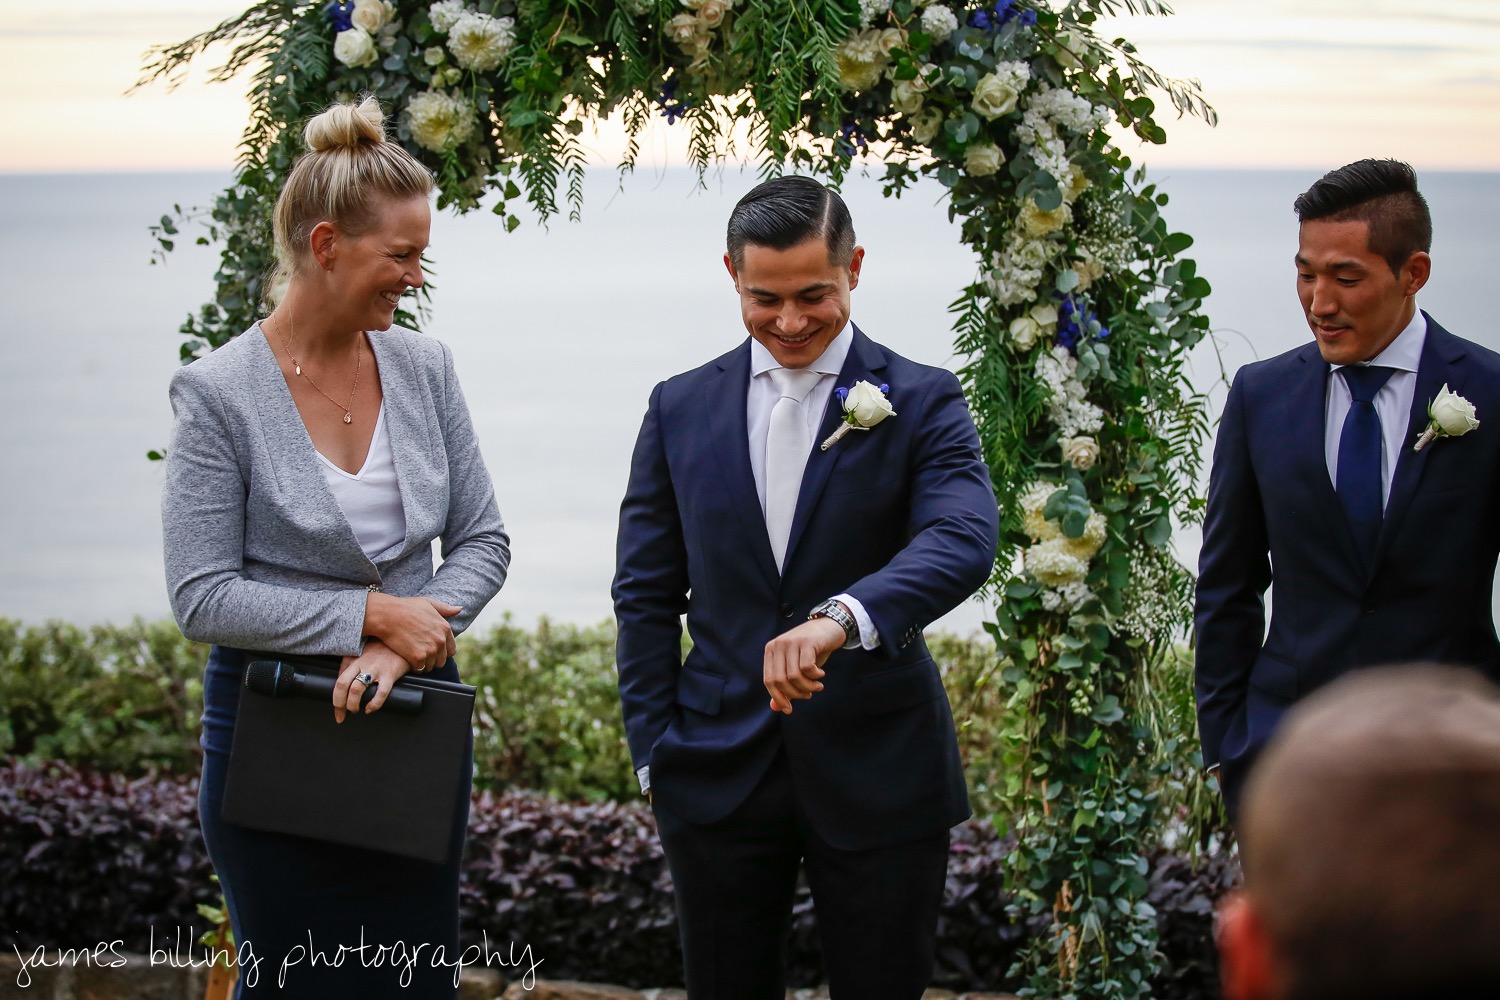 How to Plan an Eco-Friendly Wedding  Marriage Celebrant Central Coast,  Hunter & Sydney